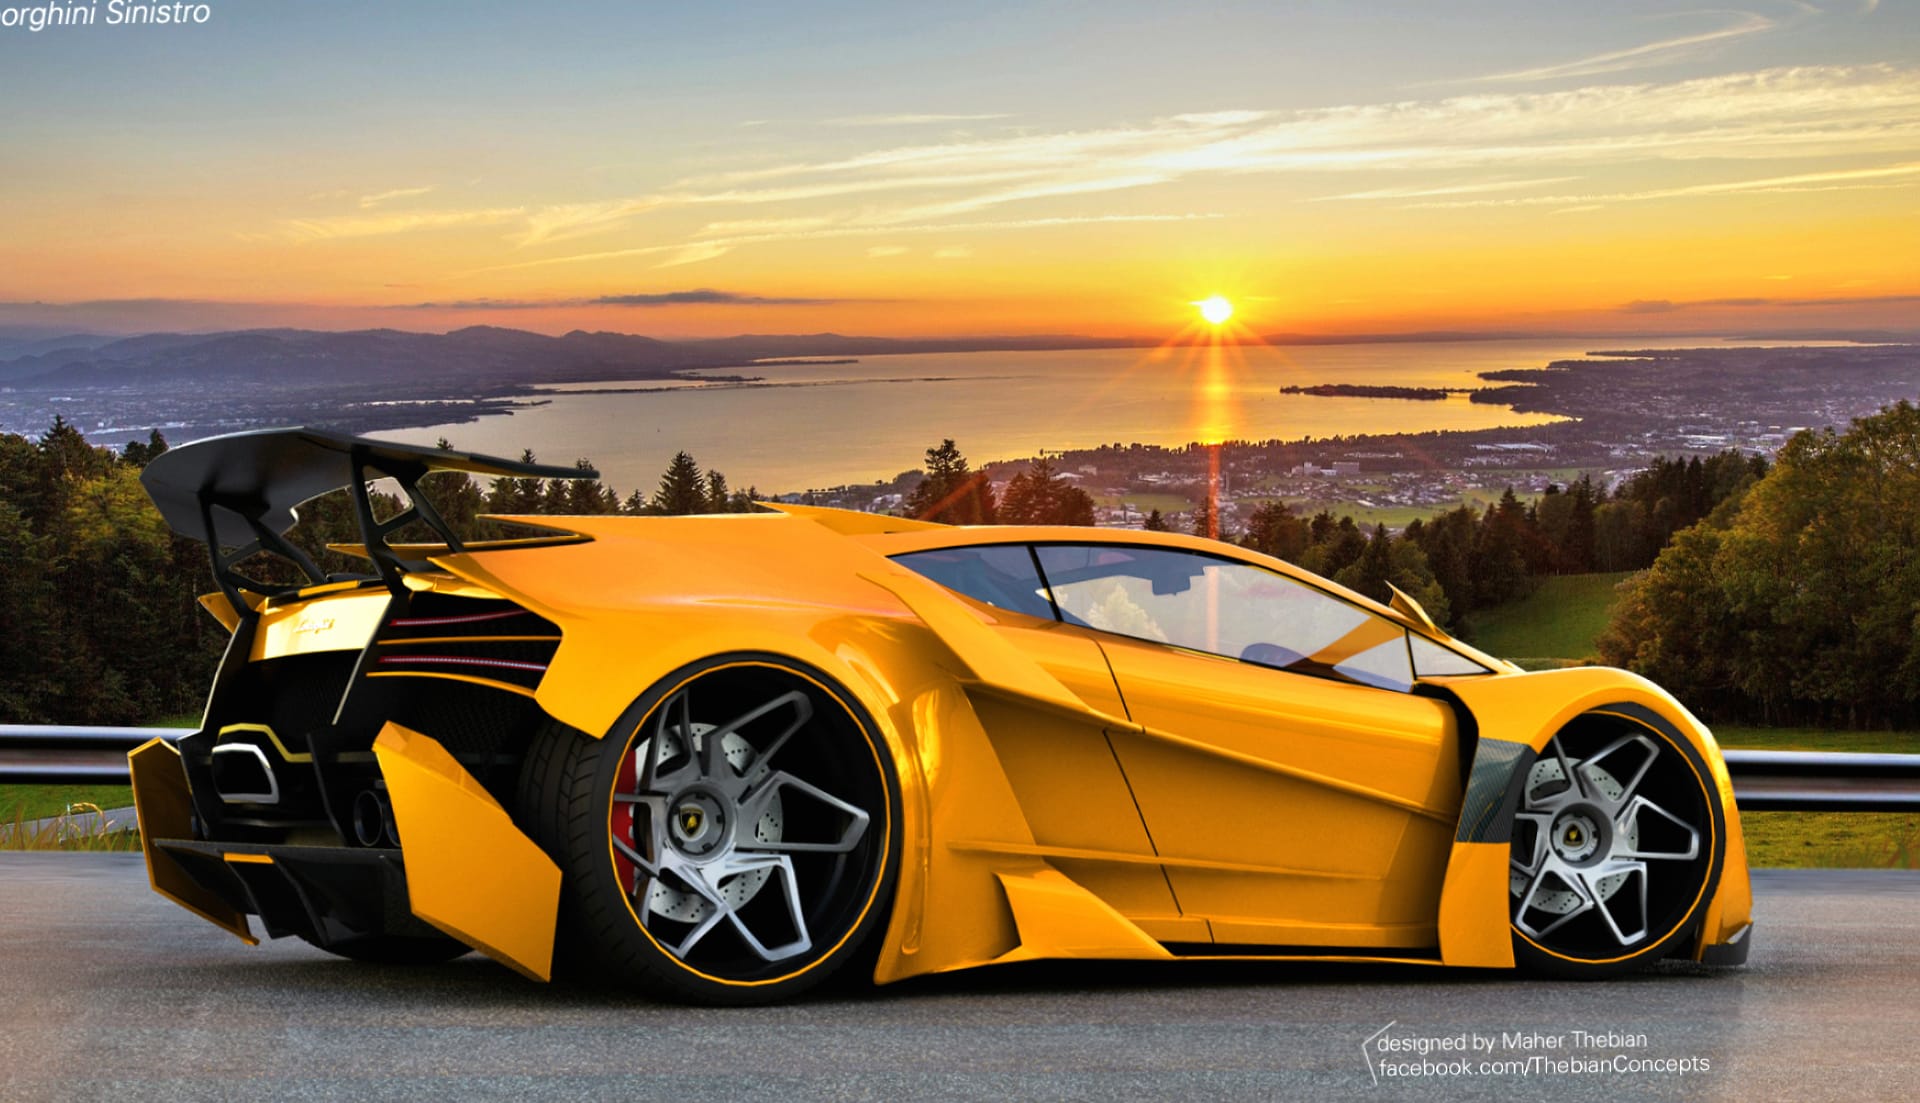 Lamborghini Sinistro Concept at 1152 x 864 size wallpapers HD quality